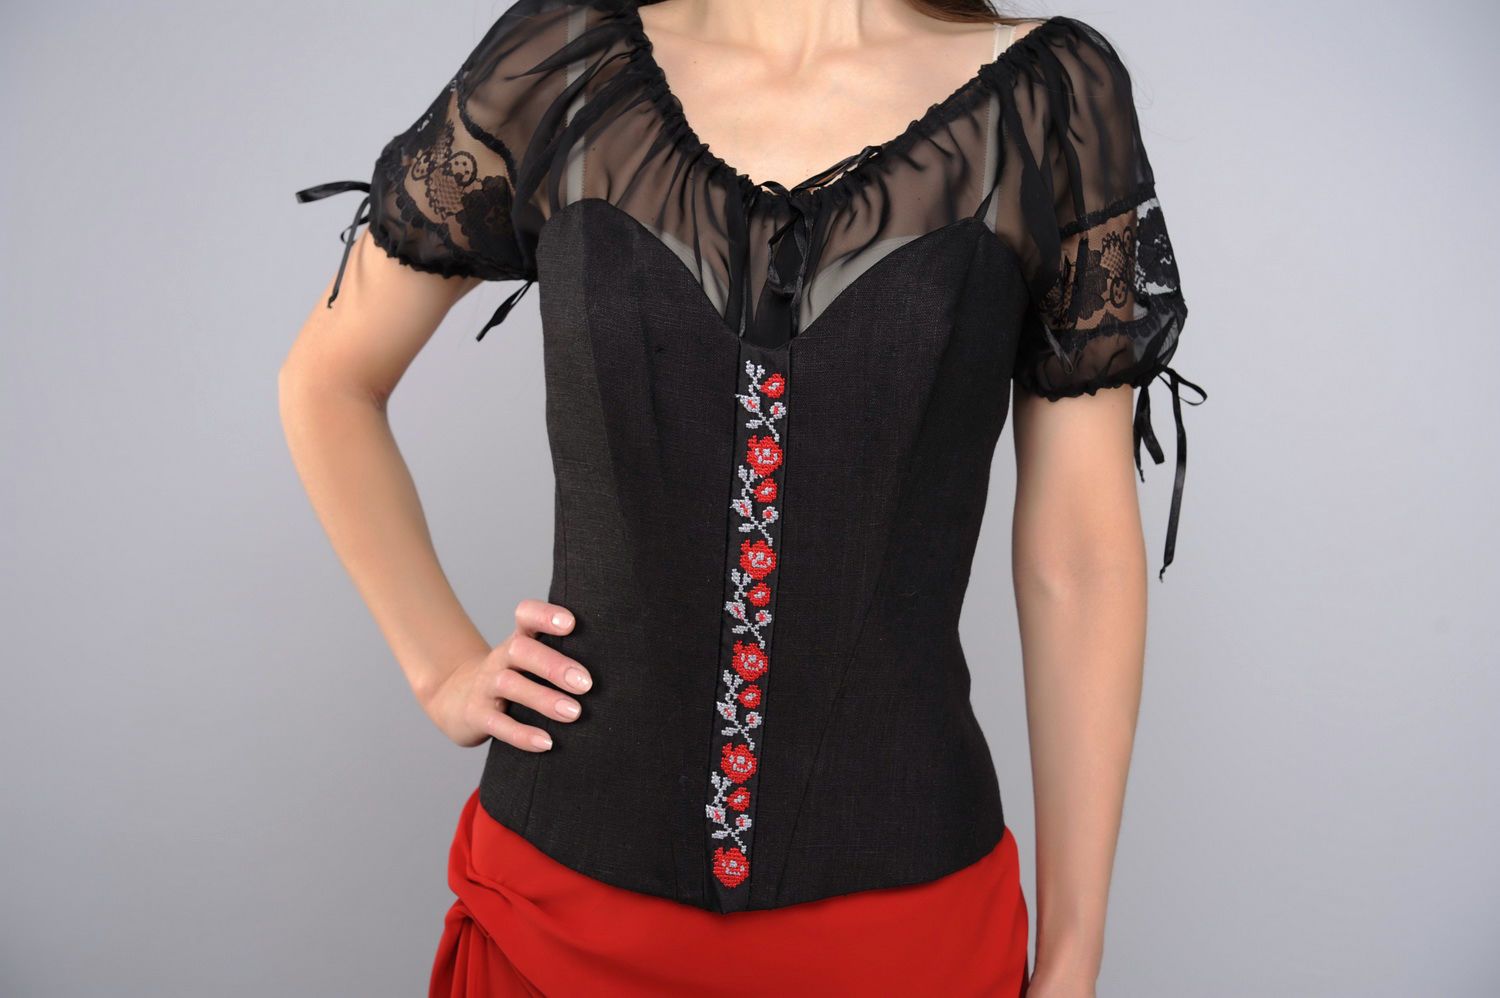 Ropa de mujer: falda, blusa, corset foto 1